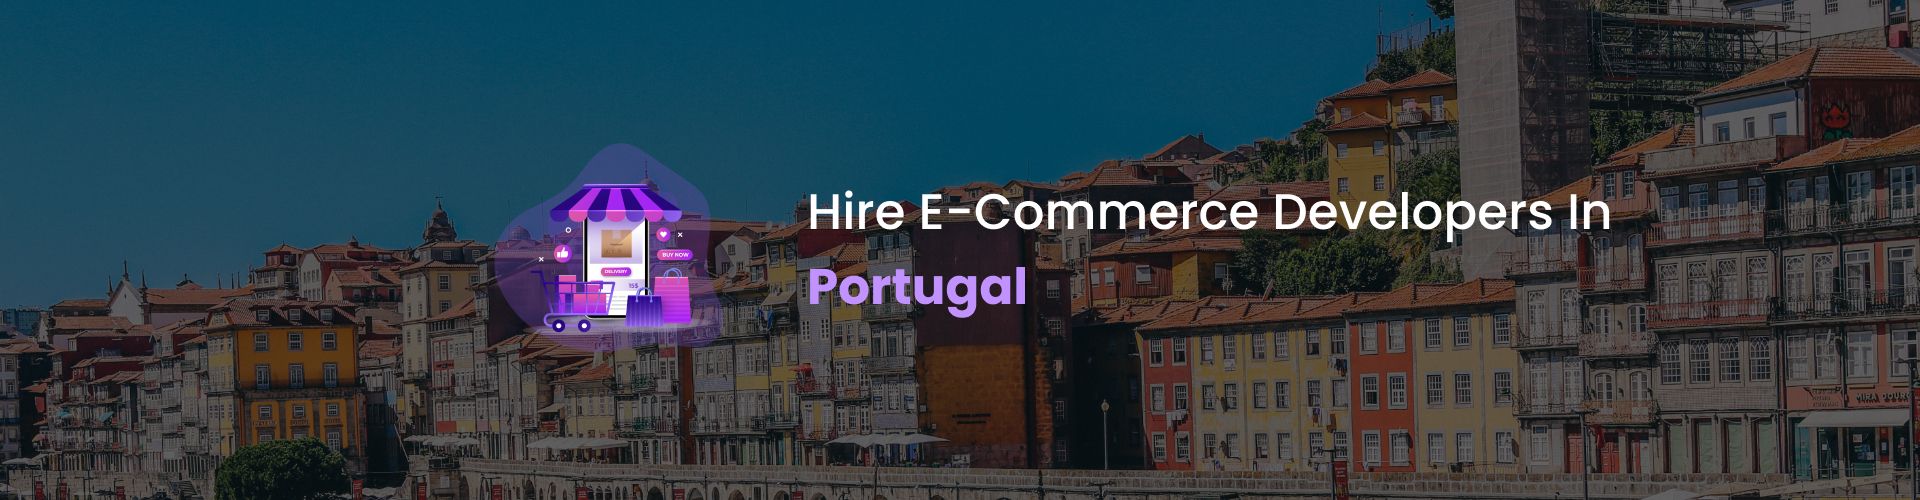 ecommerce developers portugal